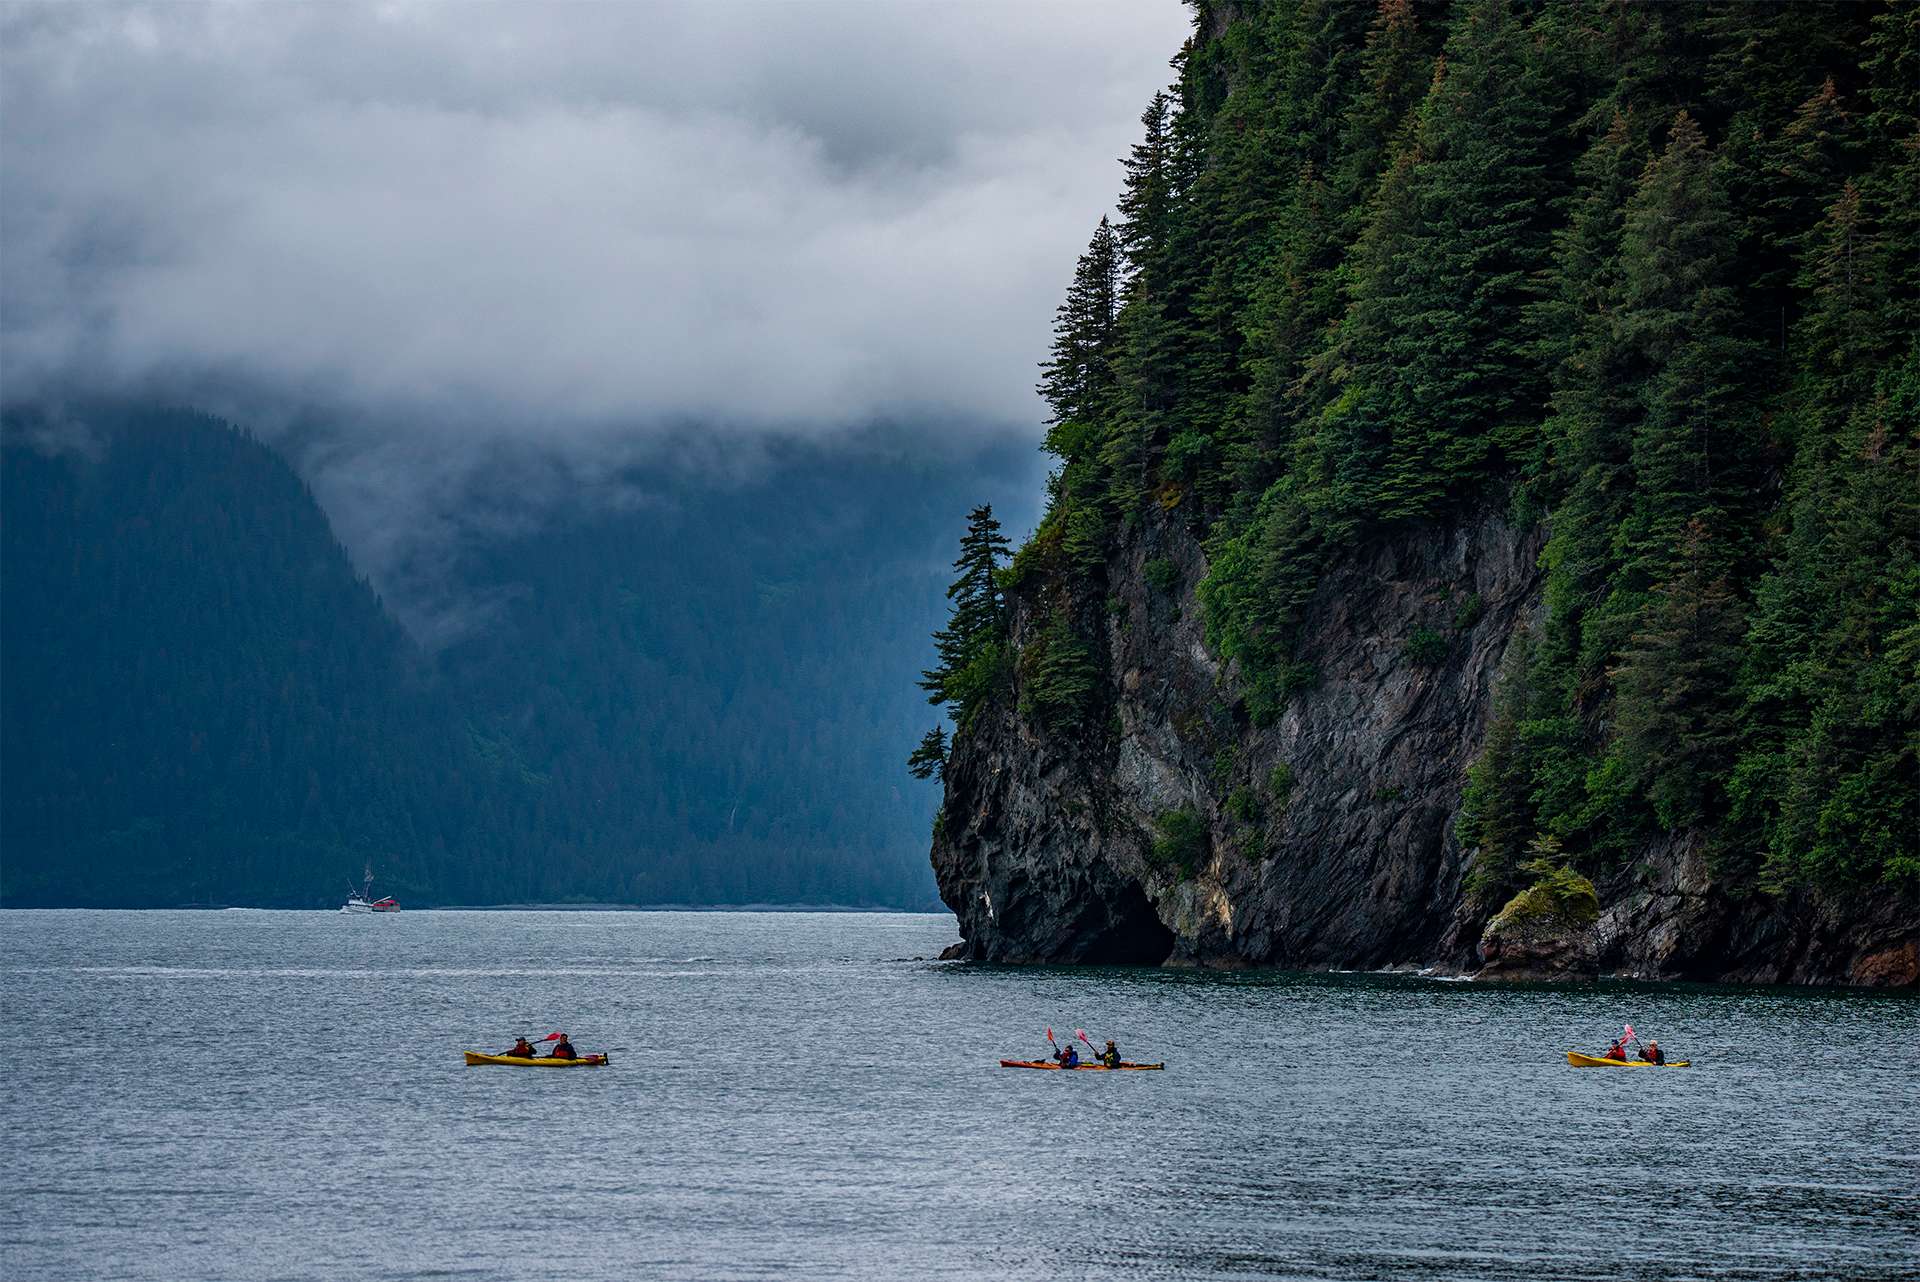 Kayaking kayakers travelers Alaska fjords misty mountain evergreens wildlife scenic landscape kayak tour